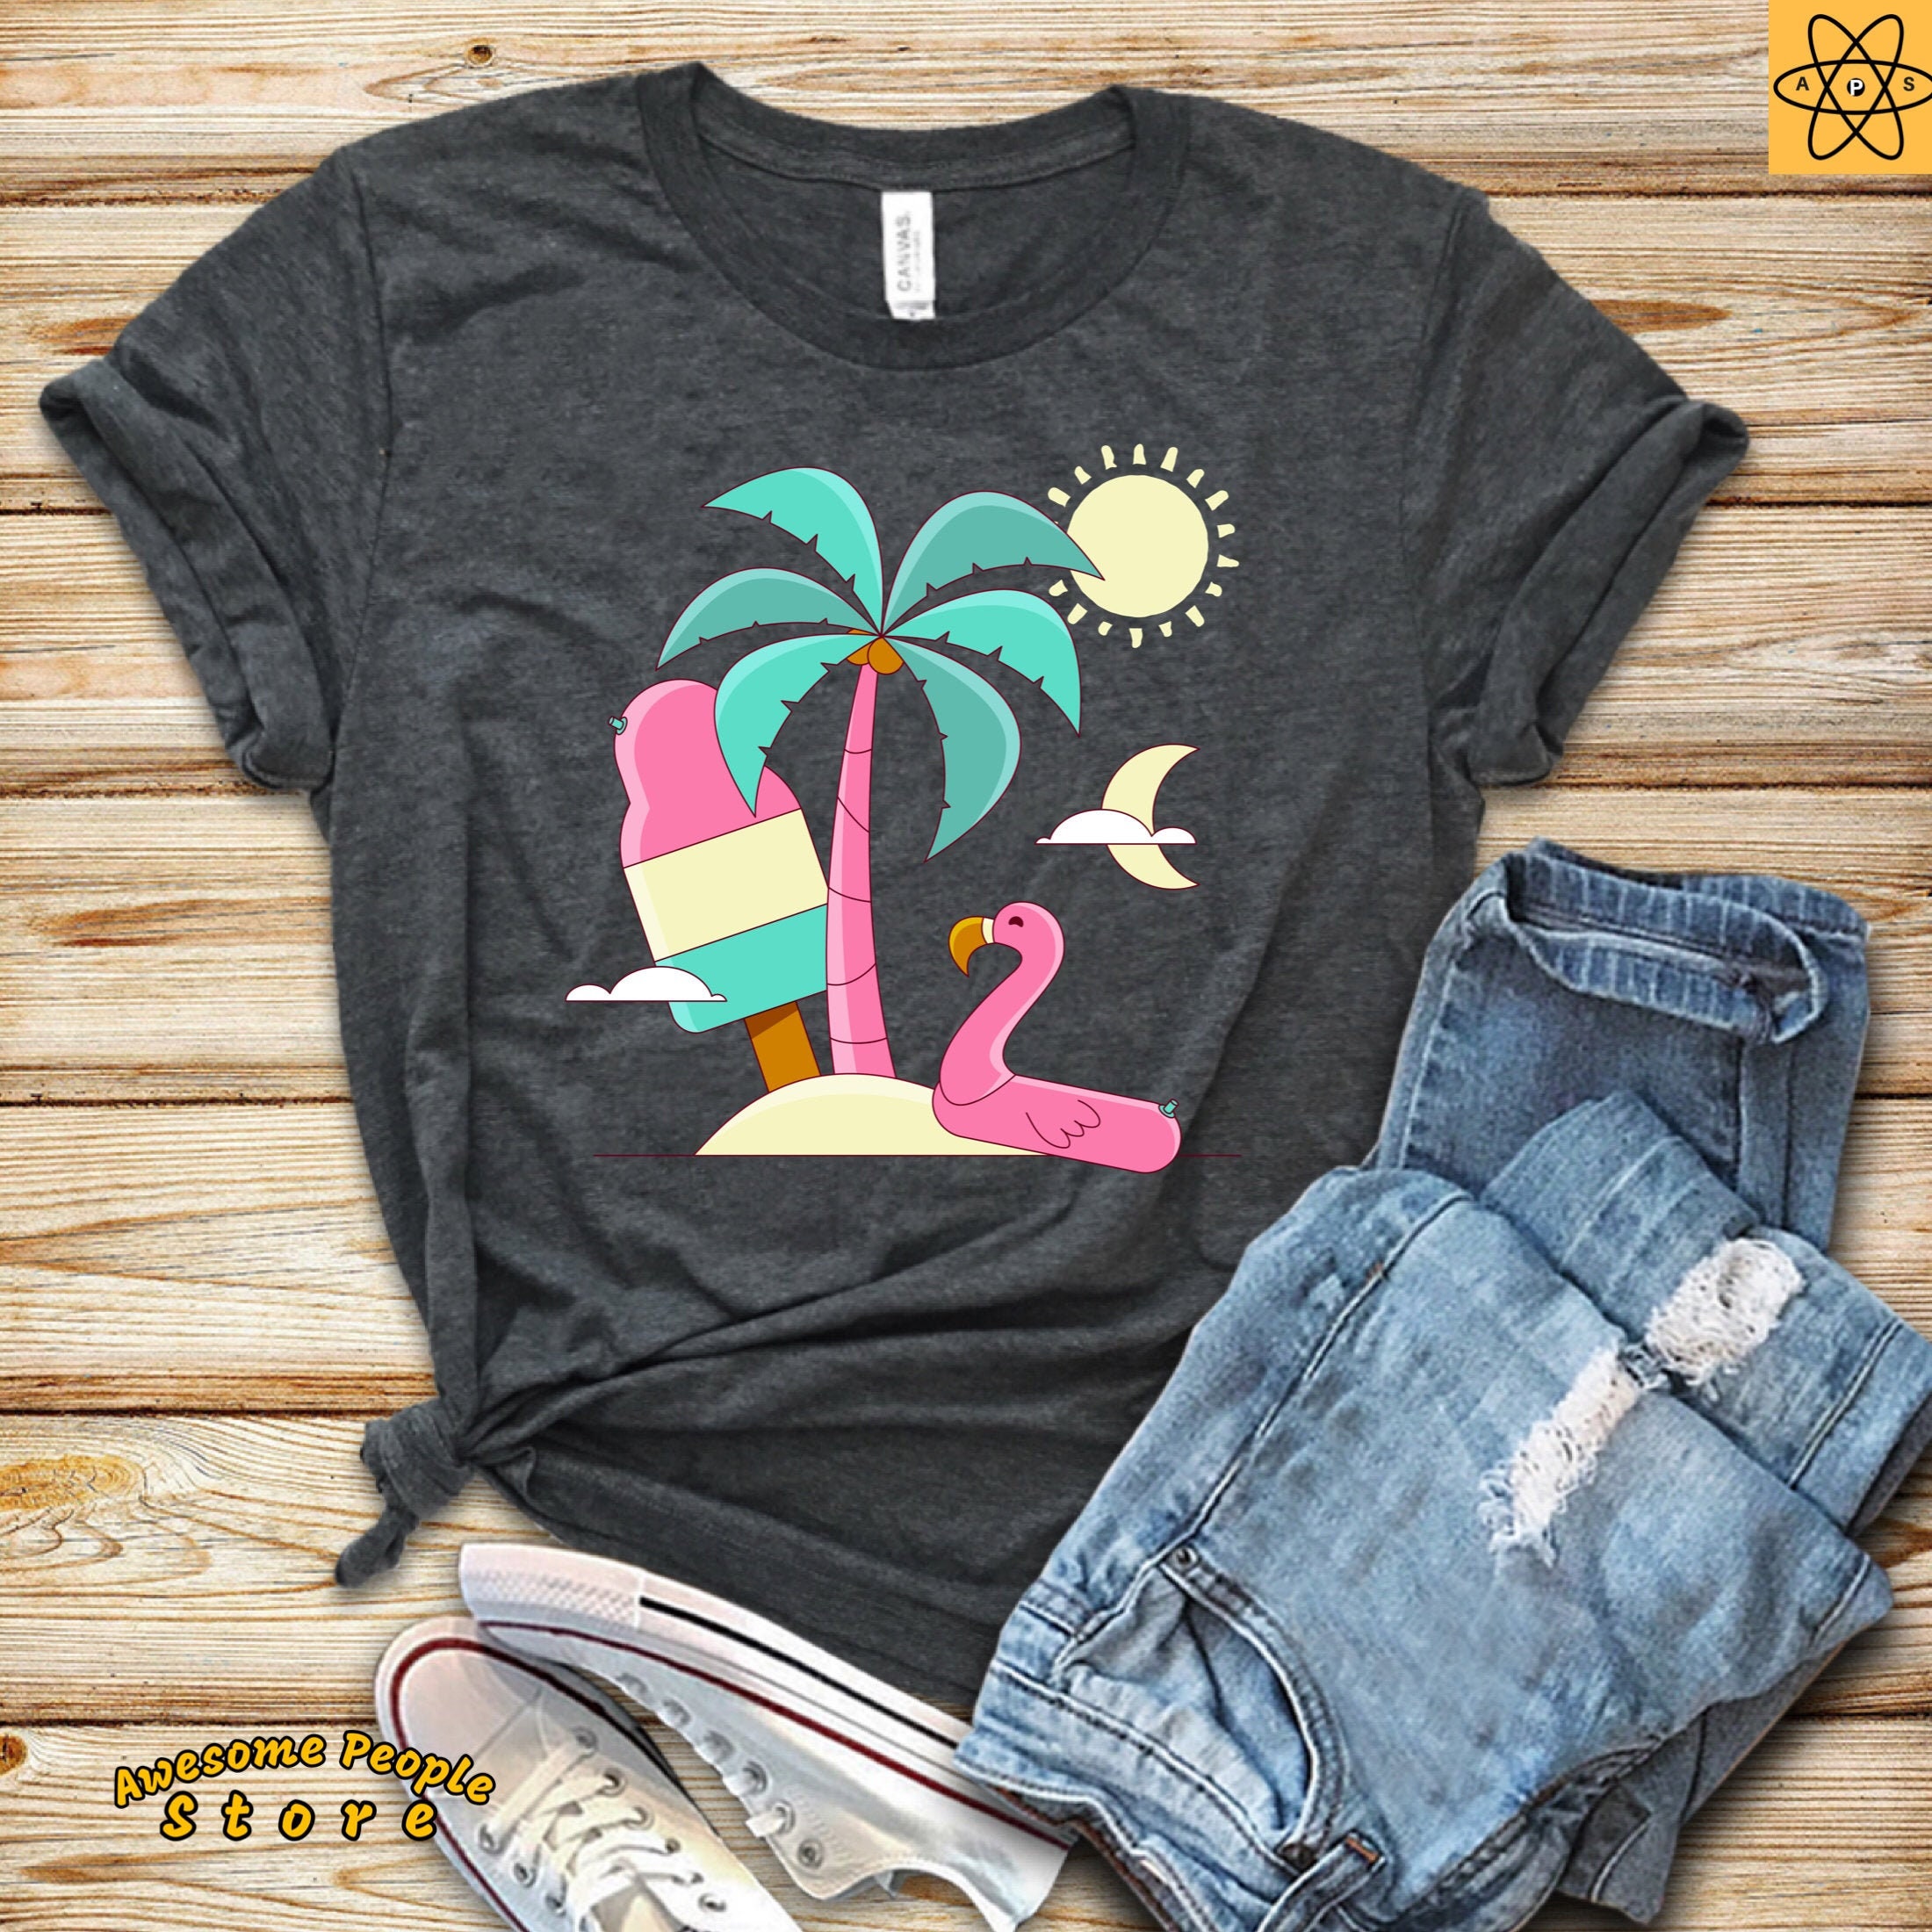 Beach shirt palm tree sunset graphic tee mens printed sell wellcoda ocean yourself